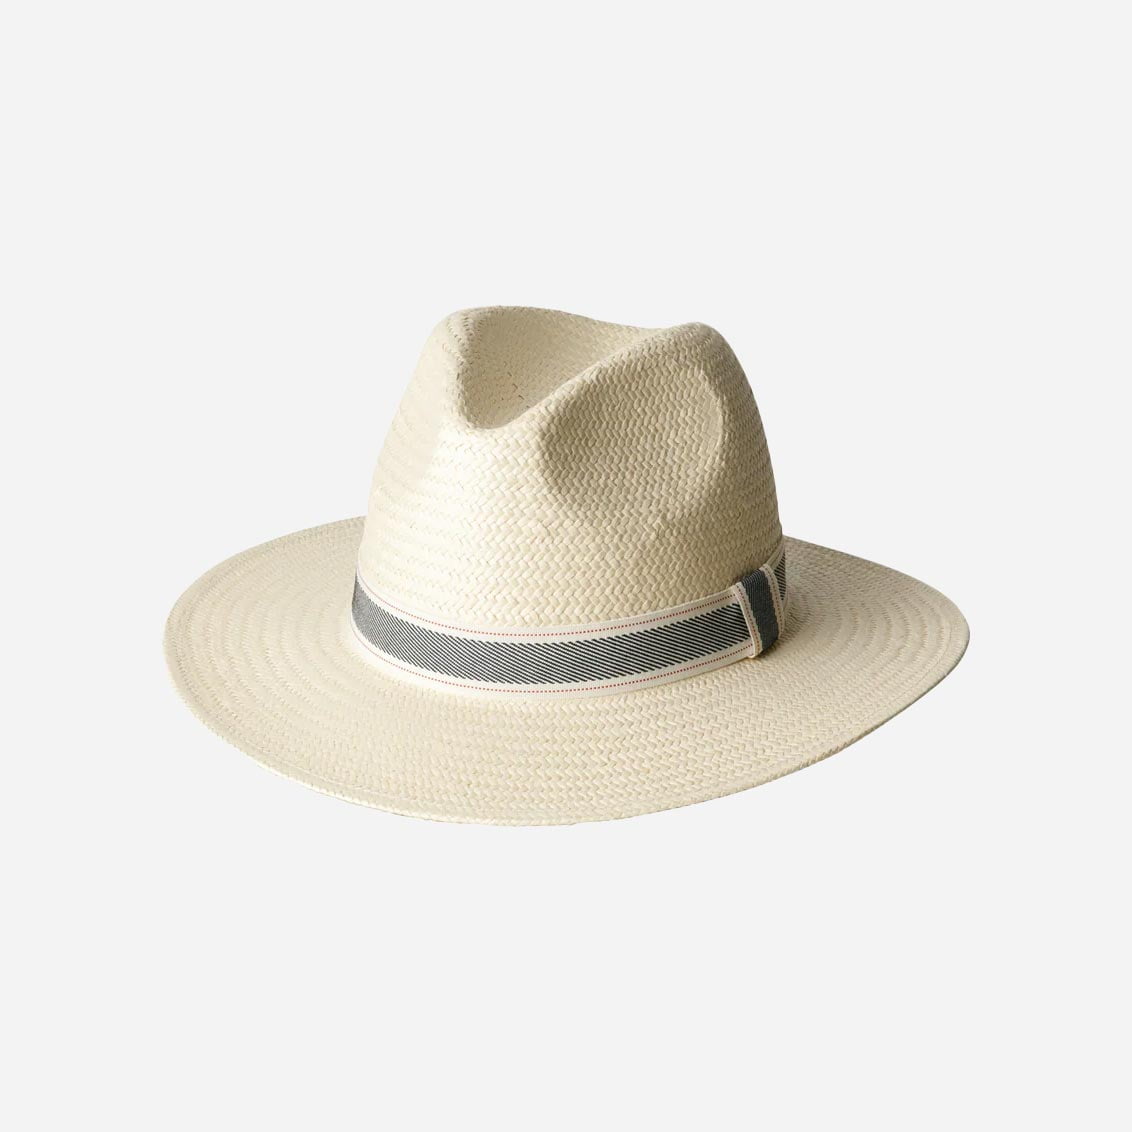 Kavu Santiago Panama Straw Hat - Natural